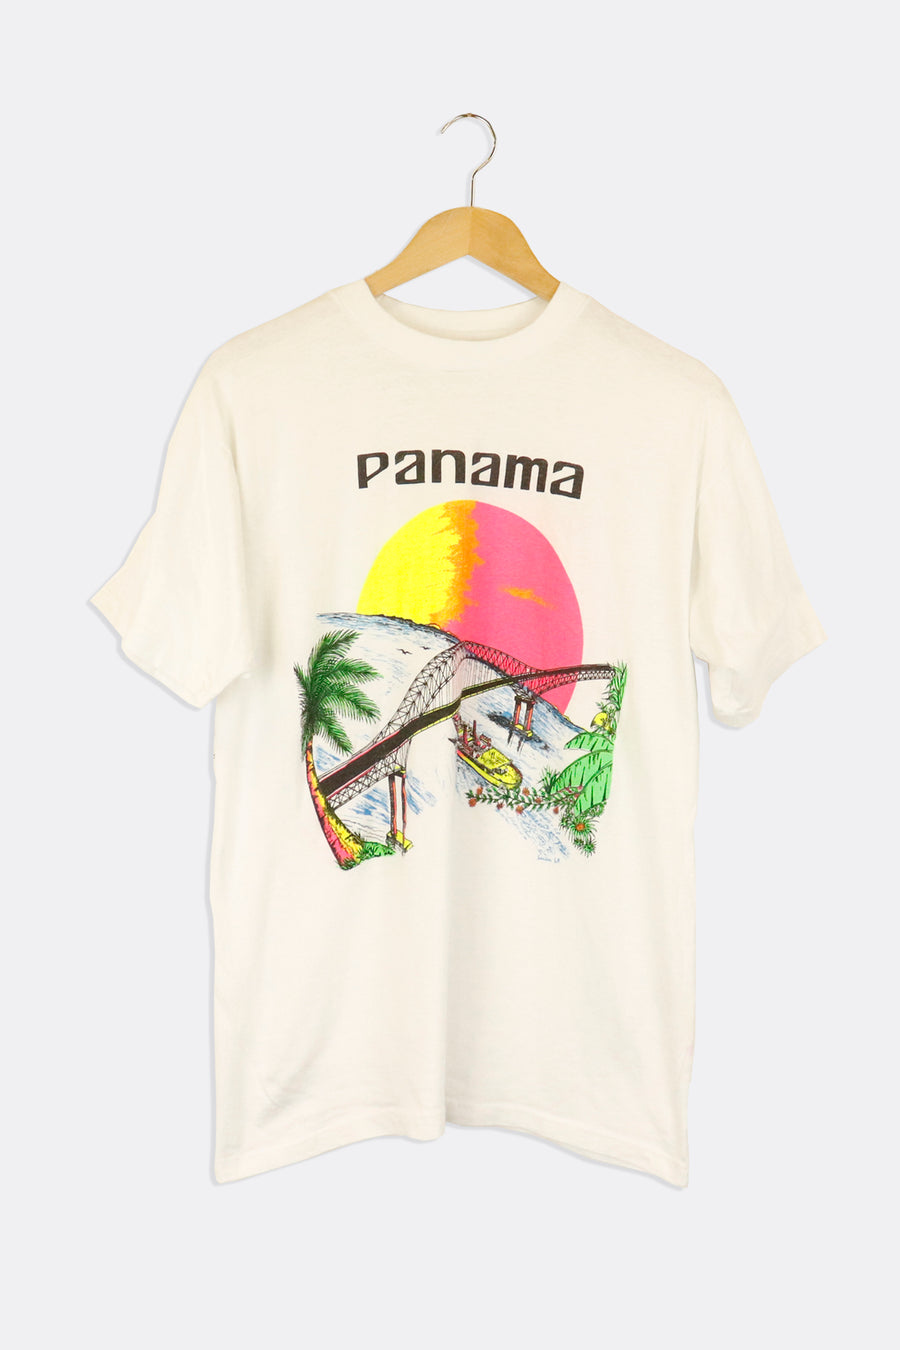 Vintage Panama Bridge Graphic And Sunset Vinyl T Shirt Sz XL